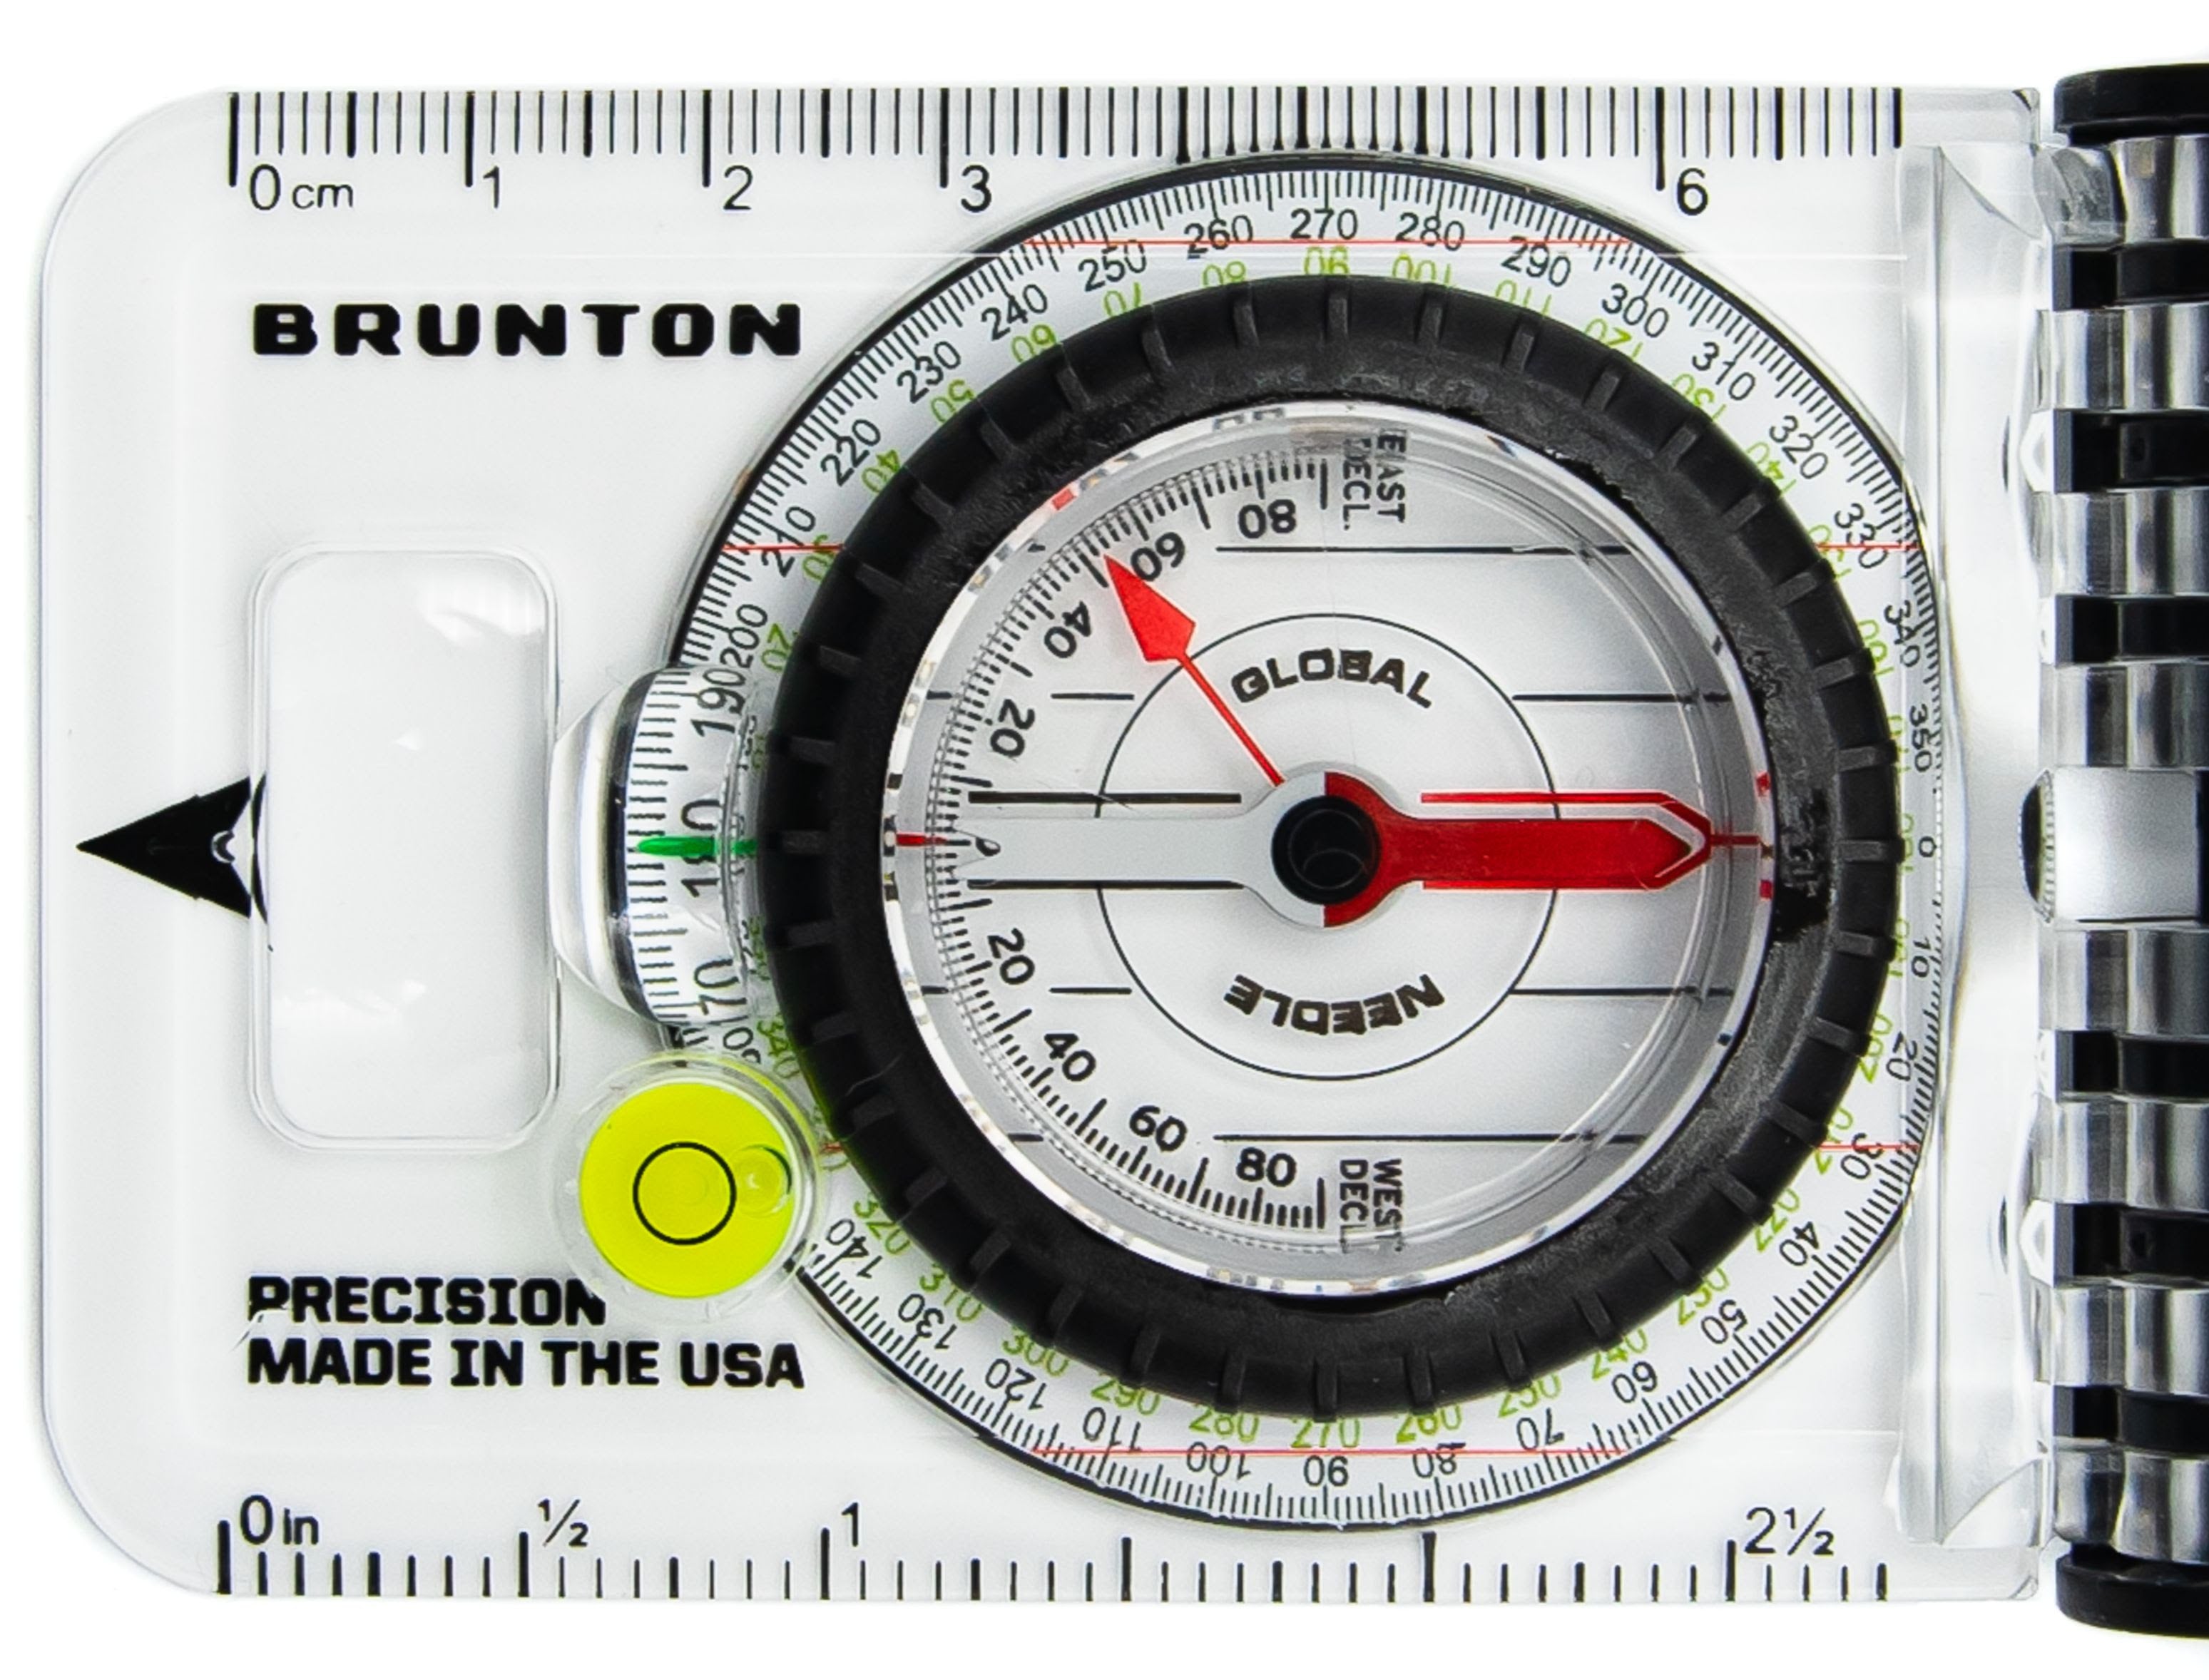 Brunton TRUARC3 Kompass, Globales Gleichgewicht